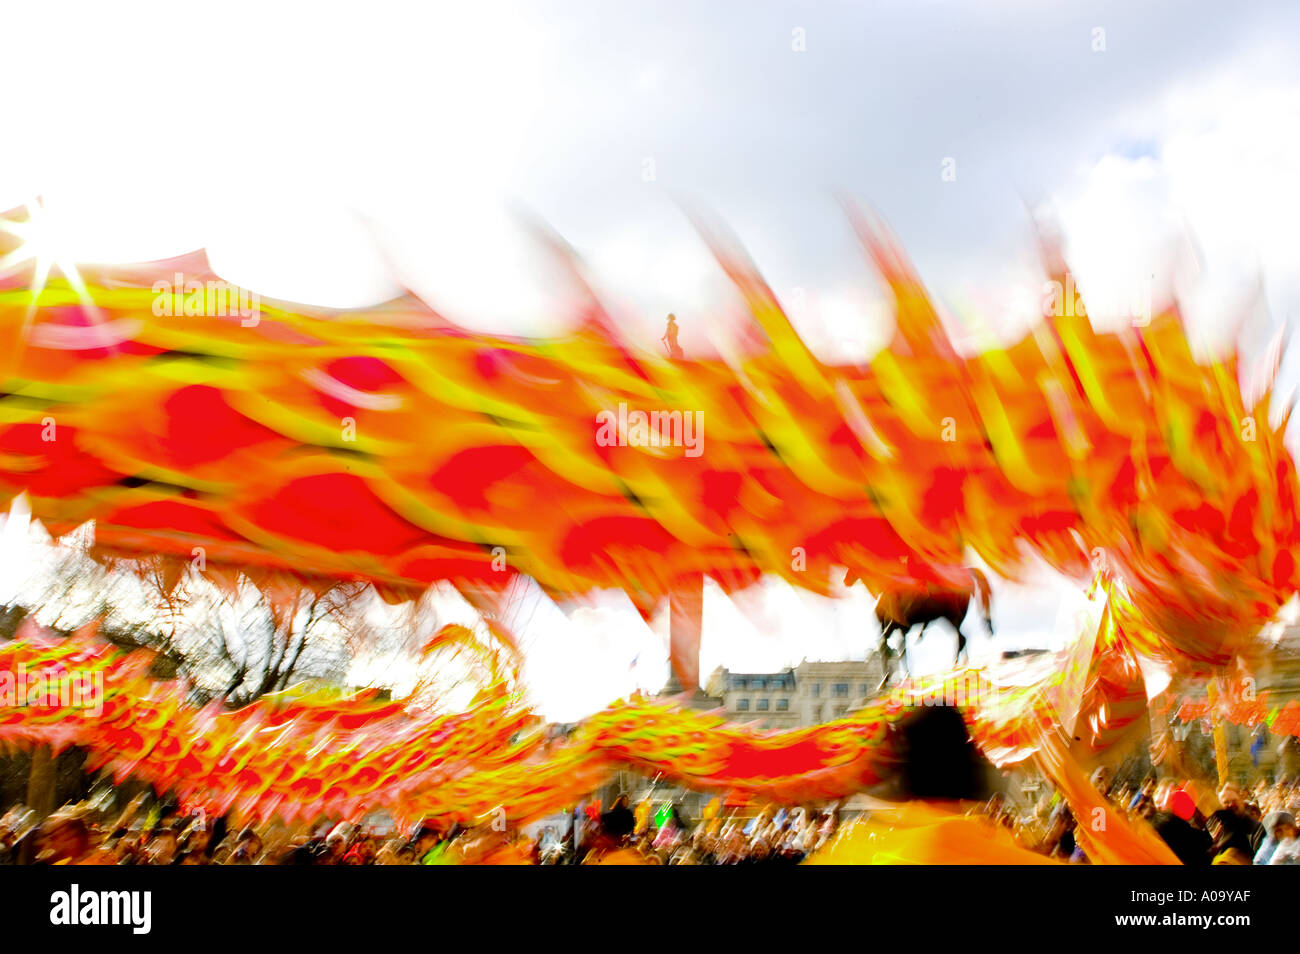 Movement blur image of orange Chinese dragon during Chinese New Year celebrations in Trafalgar Square London Stock Photo